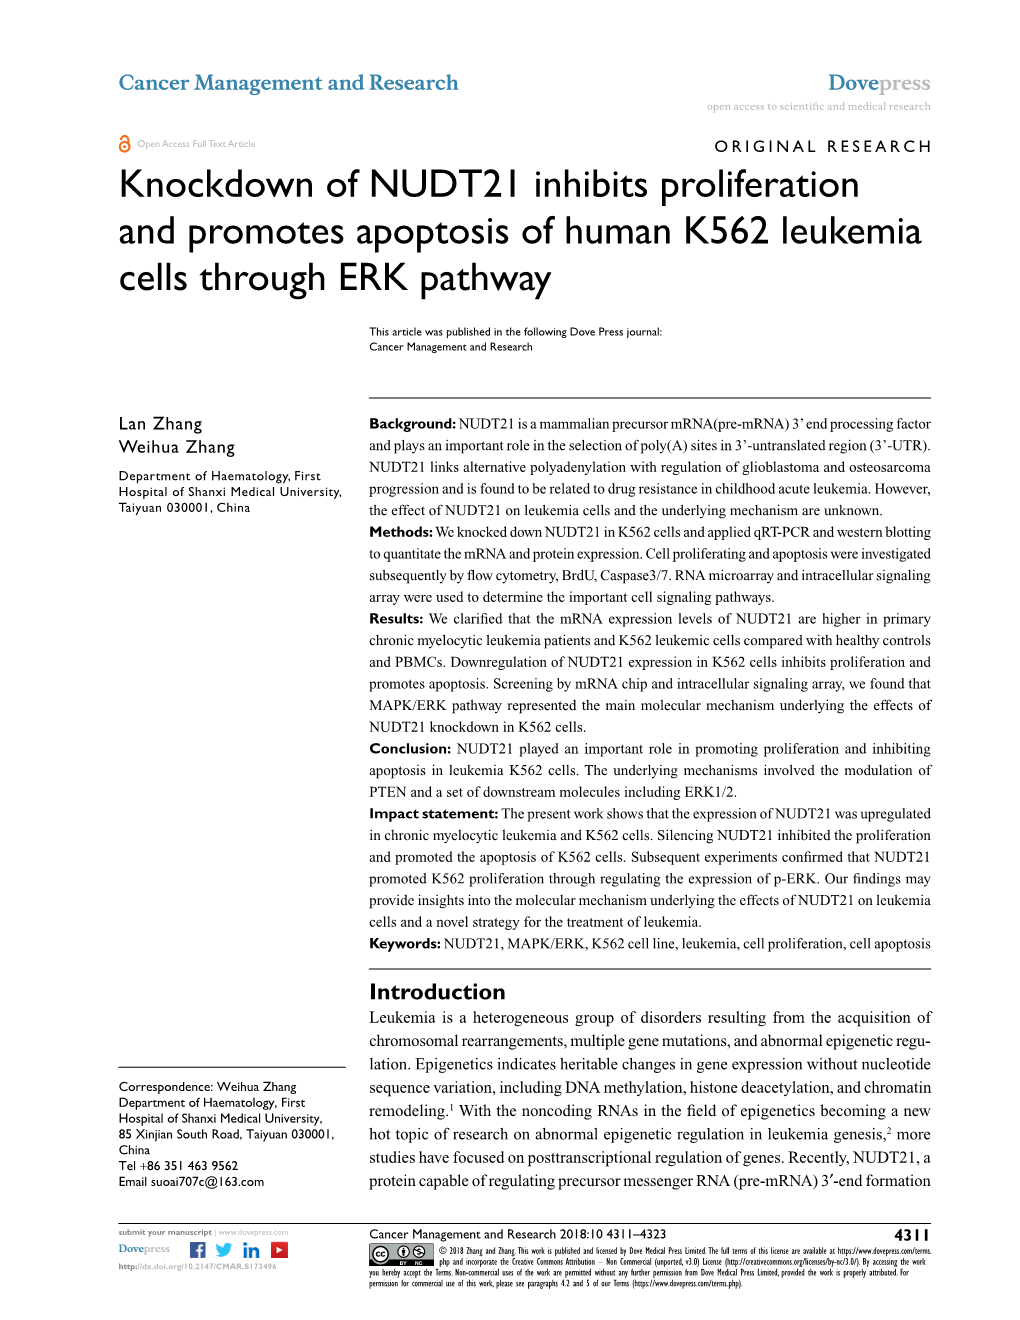 Knockdown of NUDT21 Inhibits Proliferation and Promotes Apoptosis of Human K562 Leukemia Cells Through ERK Pathway